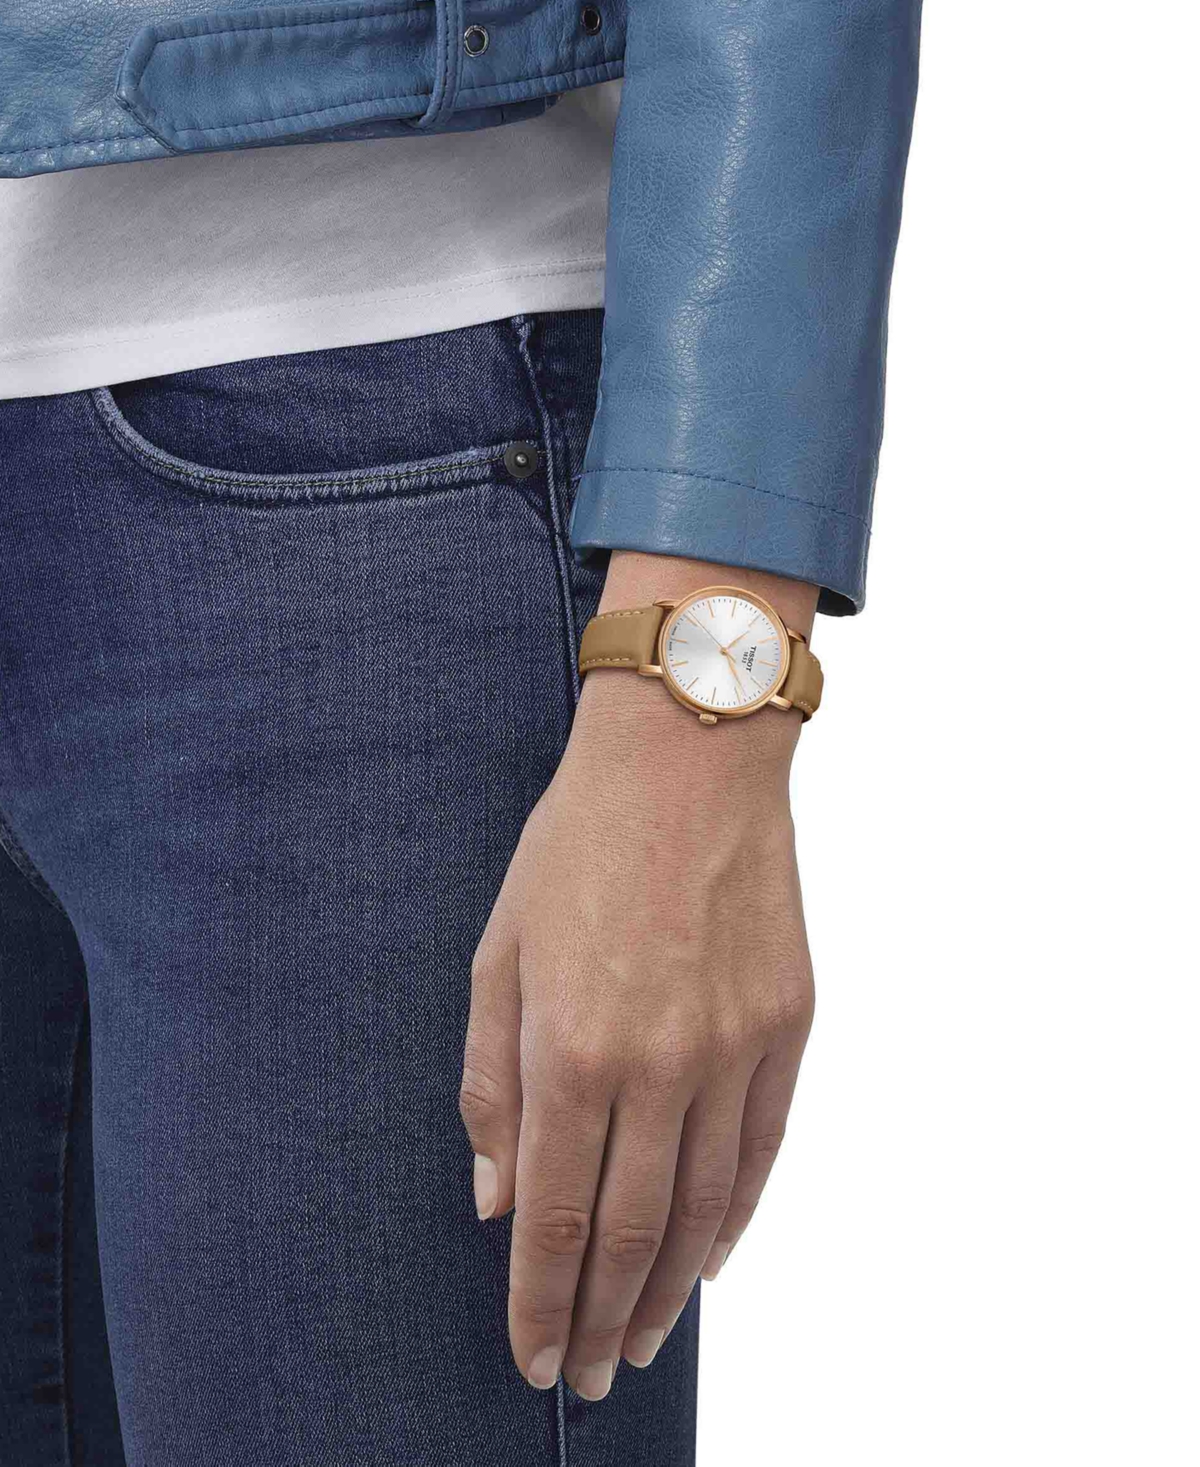 Shop Tissot Women's Swiss Everytime Beige Leather Strap Watch 34mm